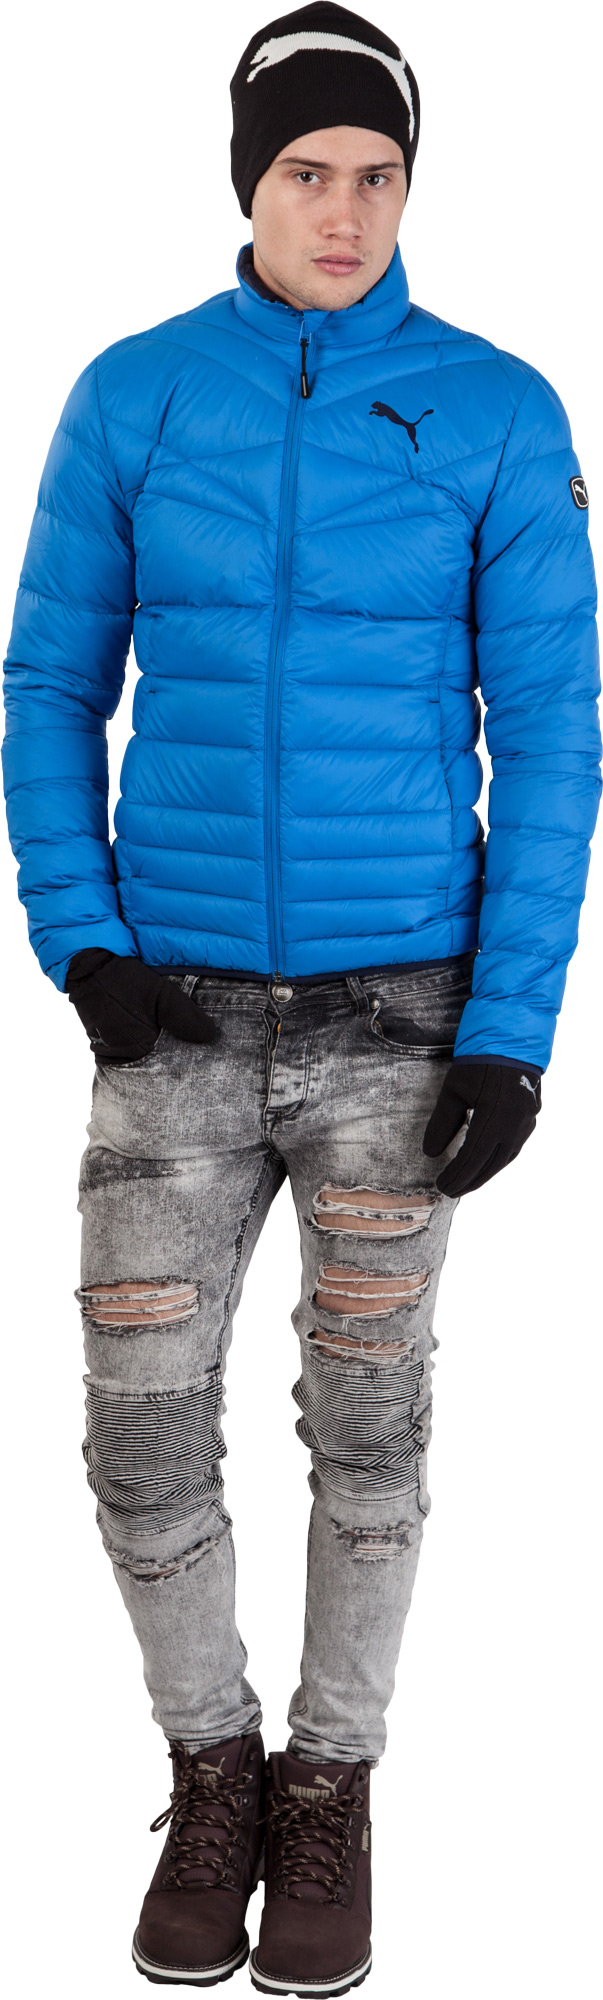 FUNDAMENTALS FLEECE GLOVES - Winter knitted gloves